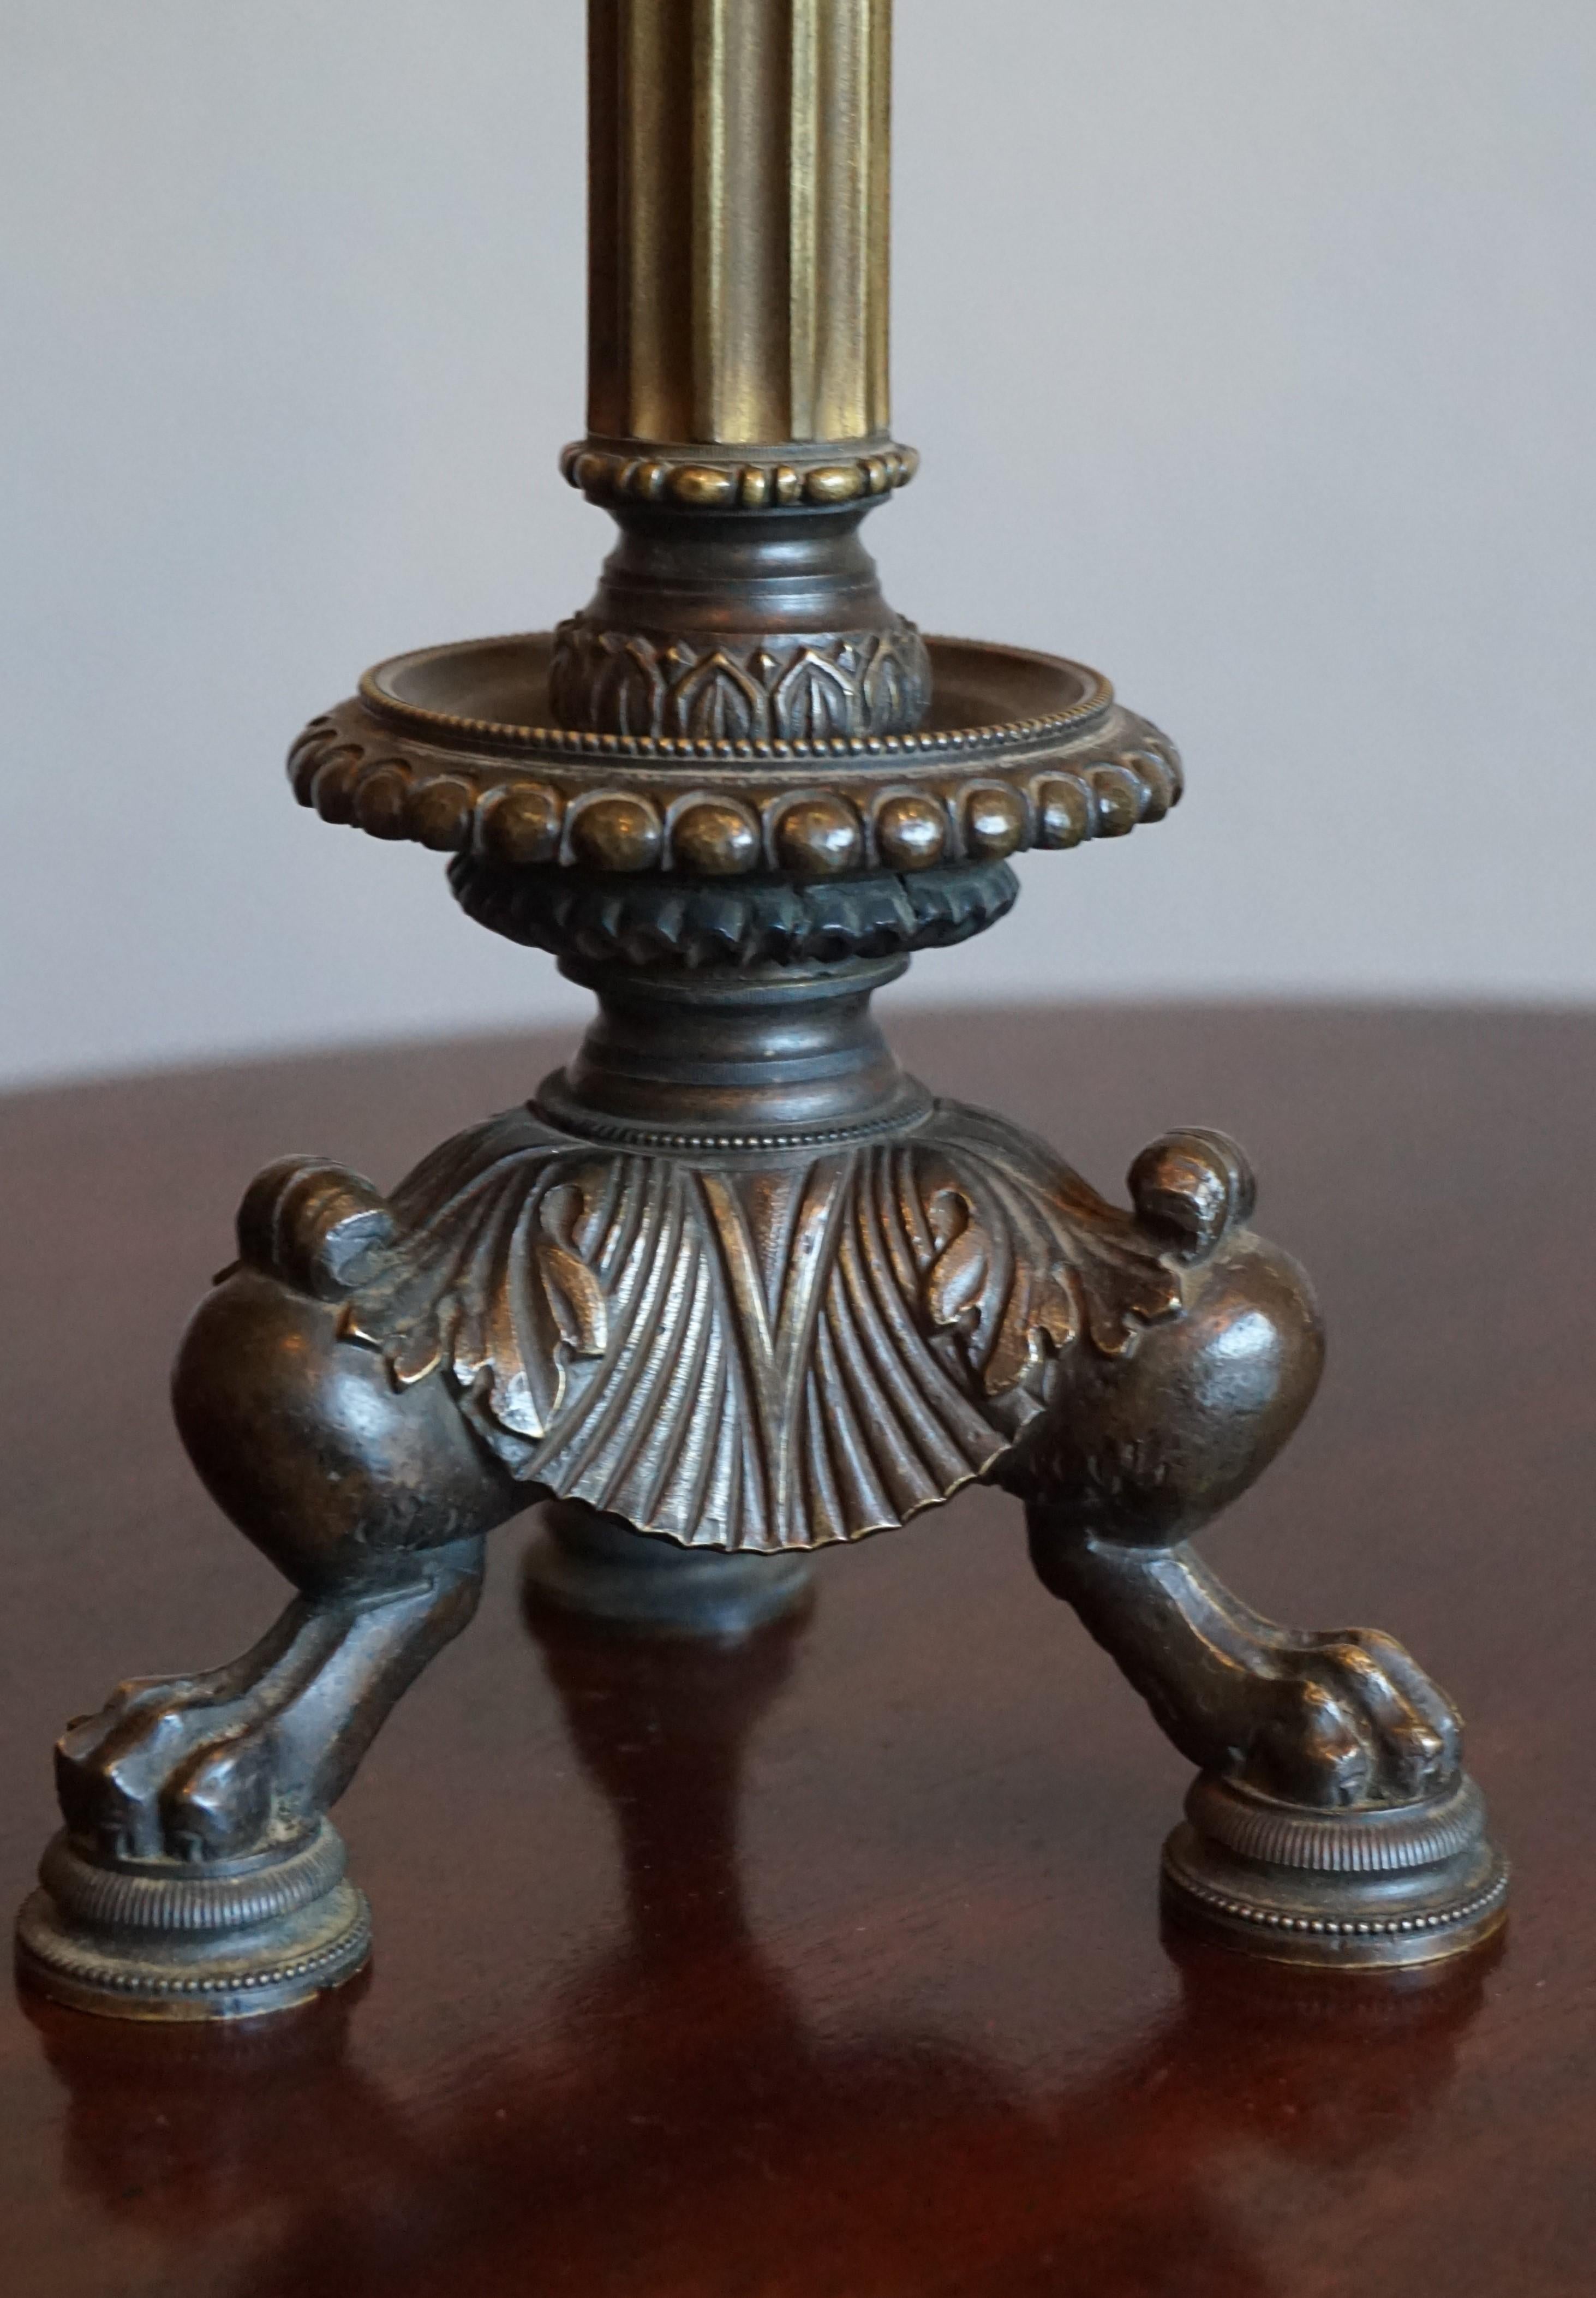 Great Pair of Antique 19th Century Bronze and Brass Empire Revival Candlesticks (19. Jahrhundert)